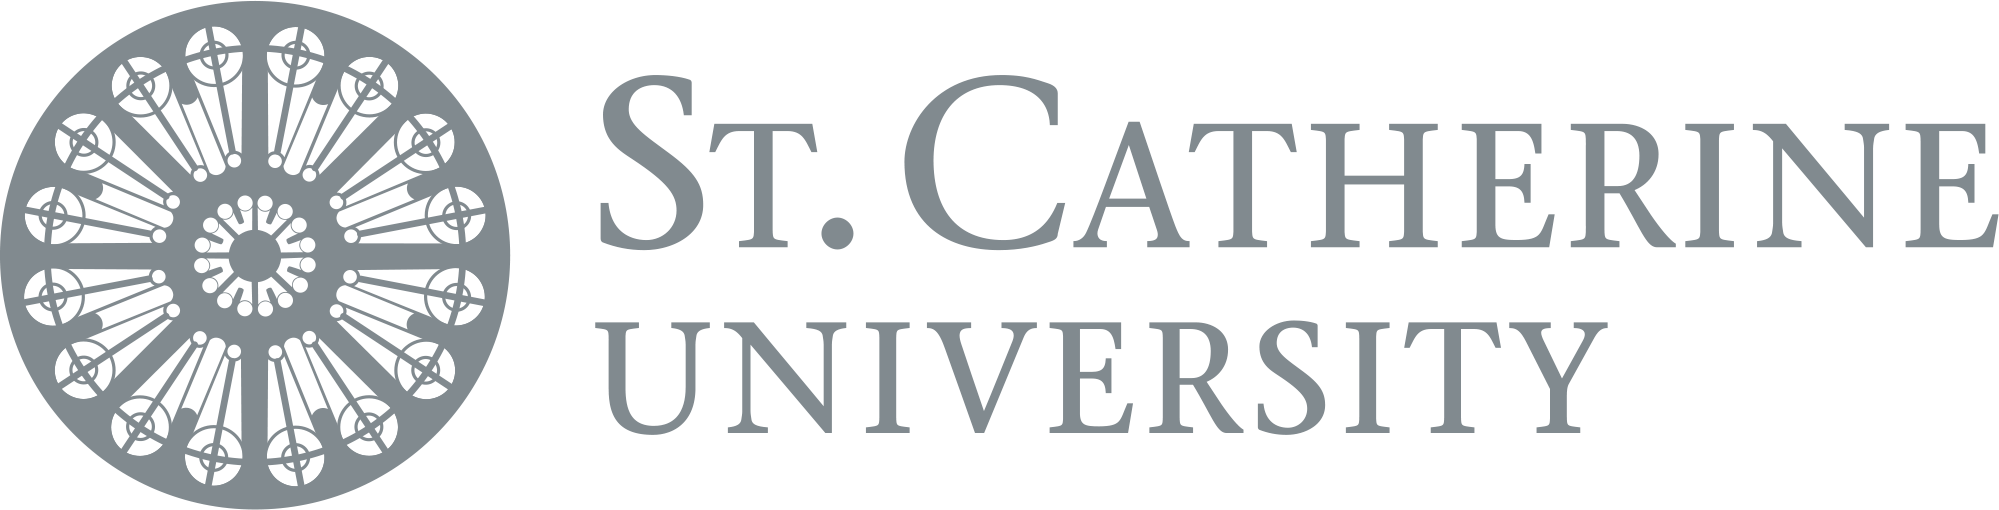 St. Catherine University compressed logo